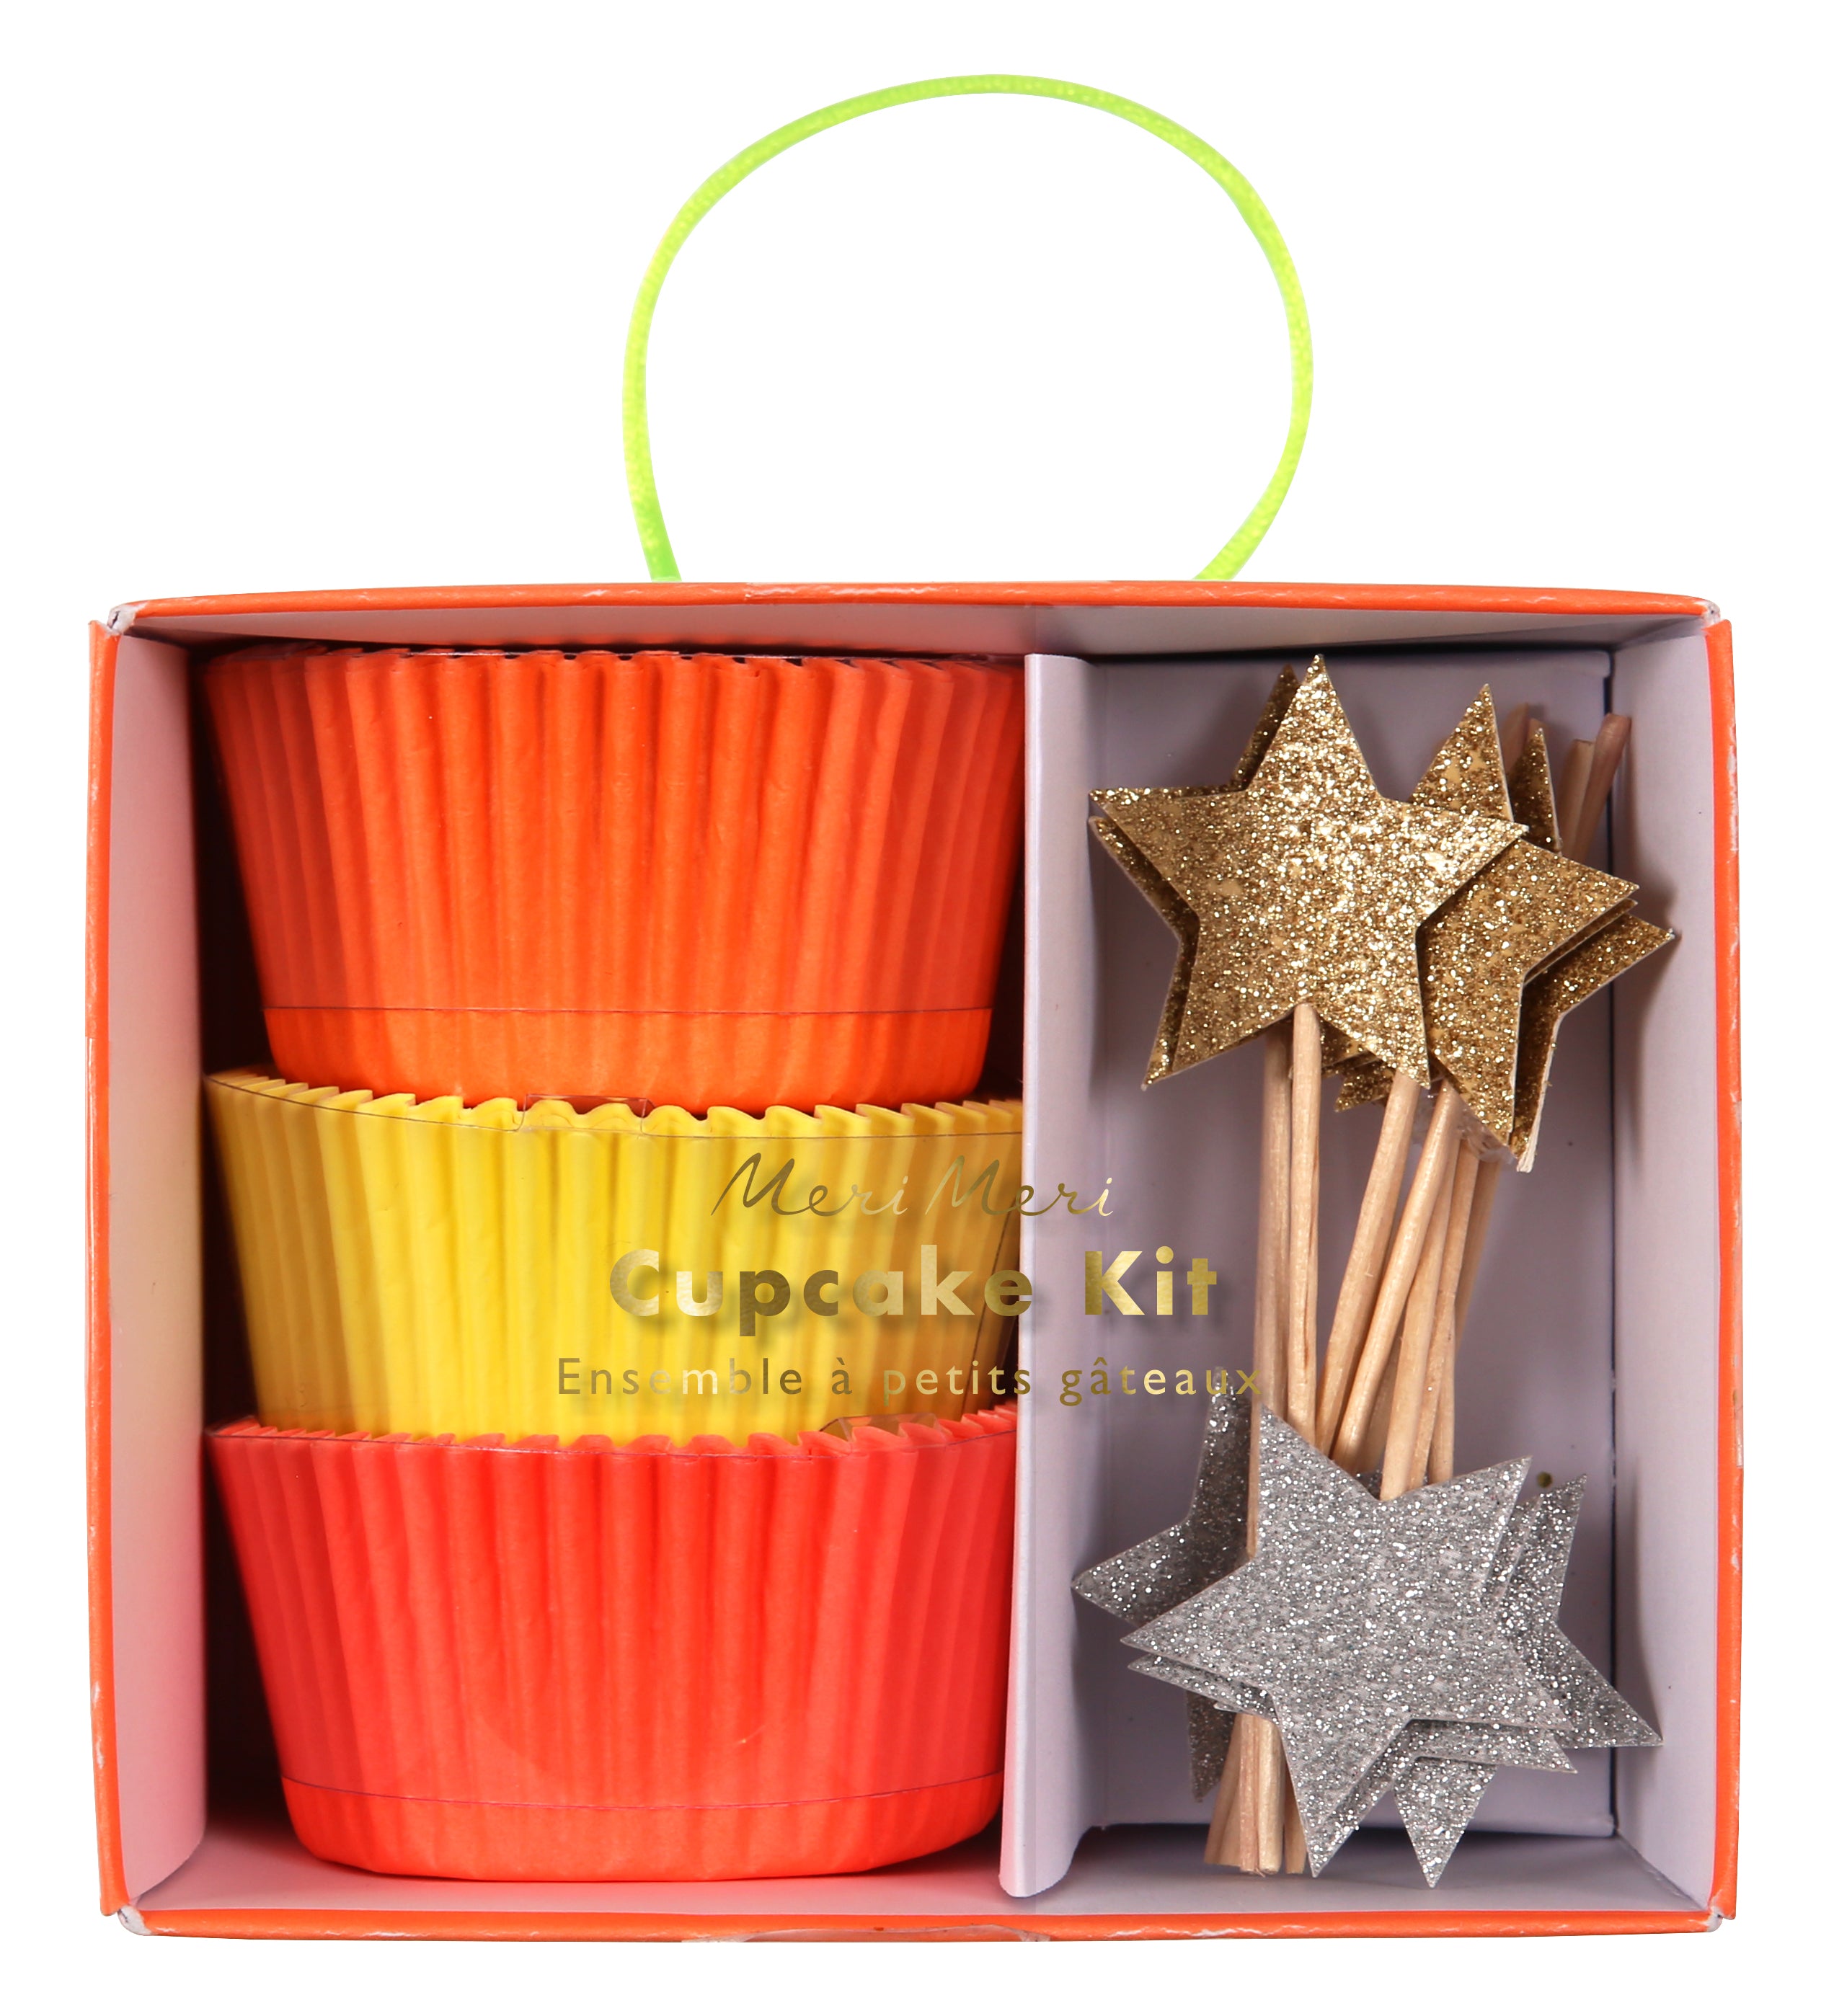 Sparkly Star Cupcake Kit